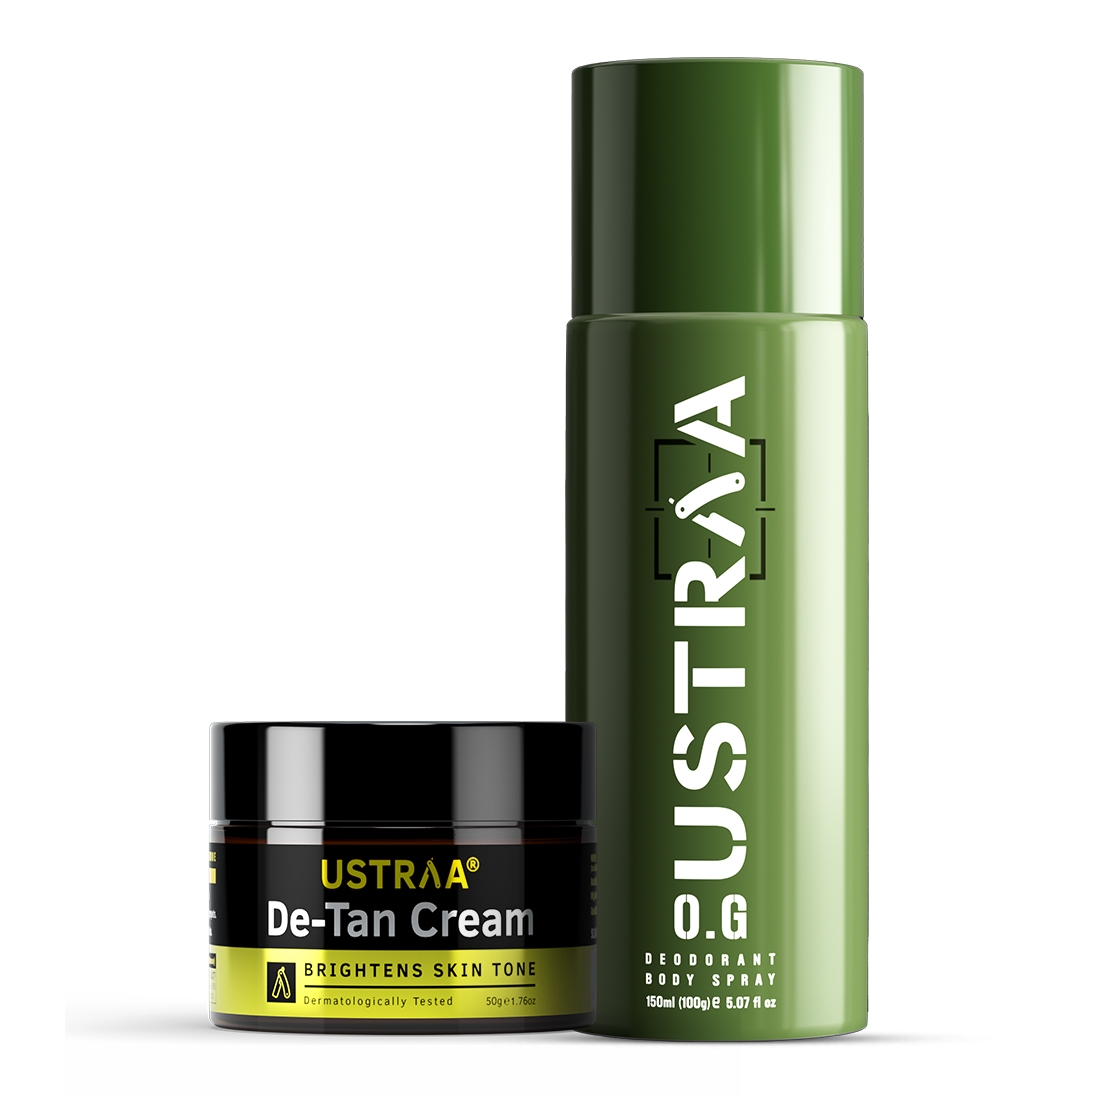 Ustraa | Ustraa O.G Deodorant - 150ml & De-Tan Cream - 50g Combo 0